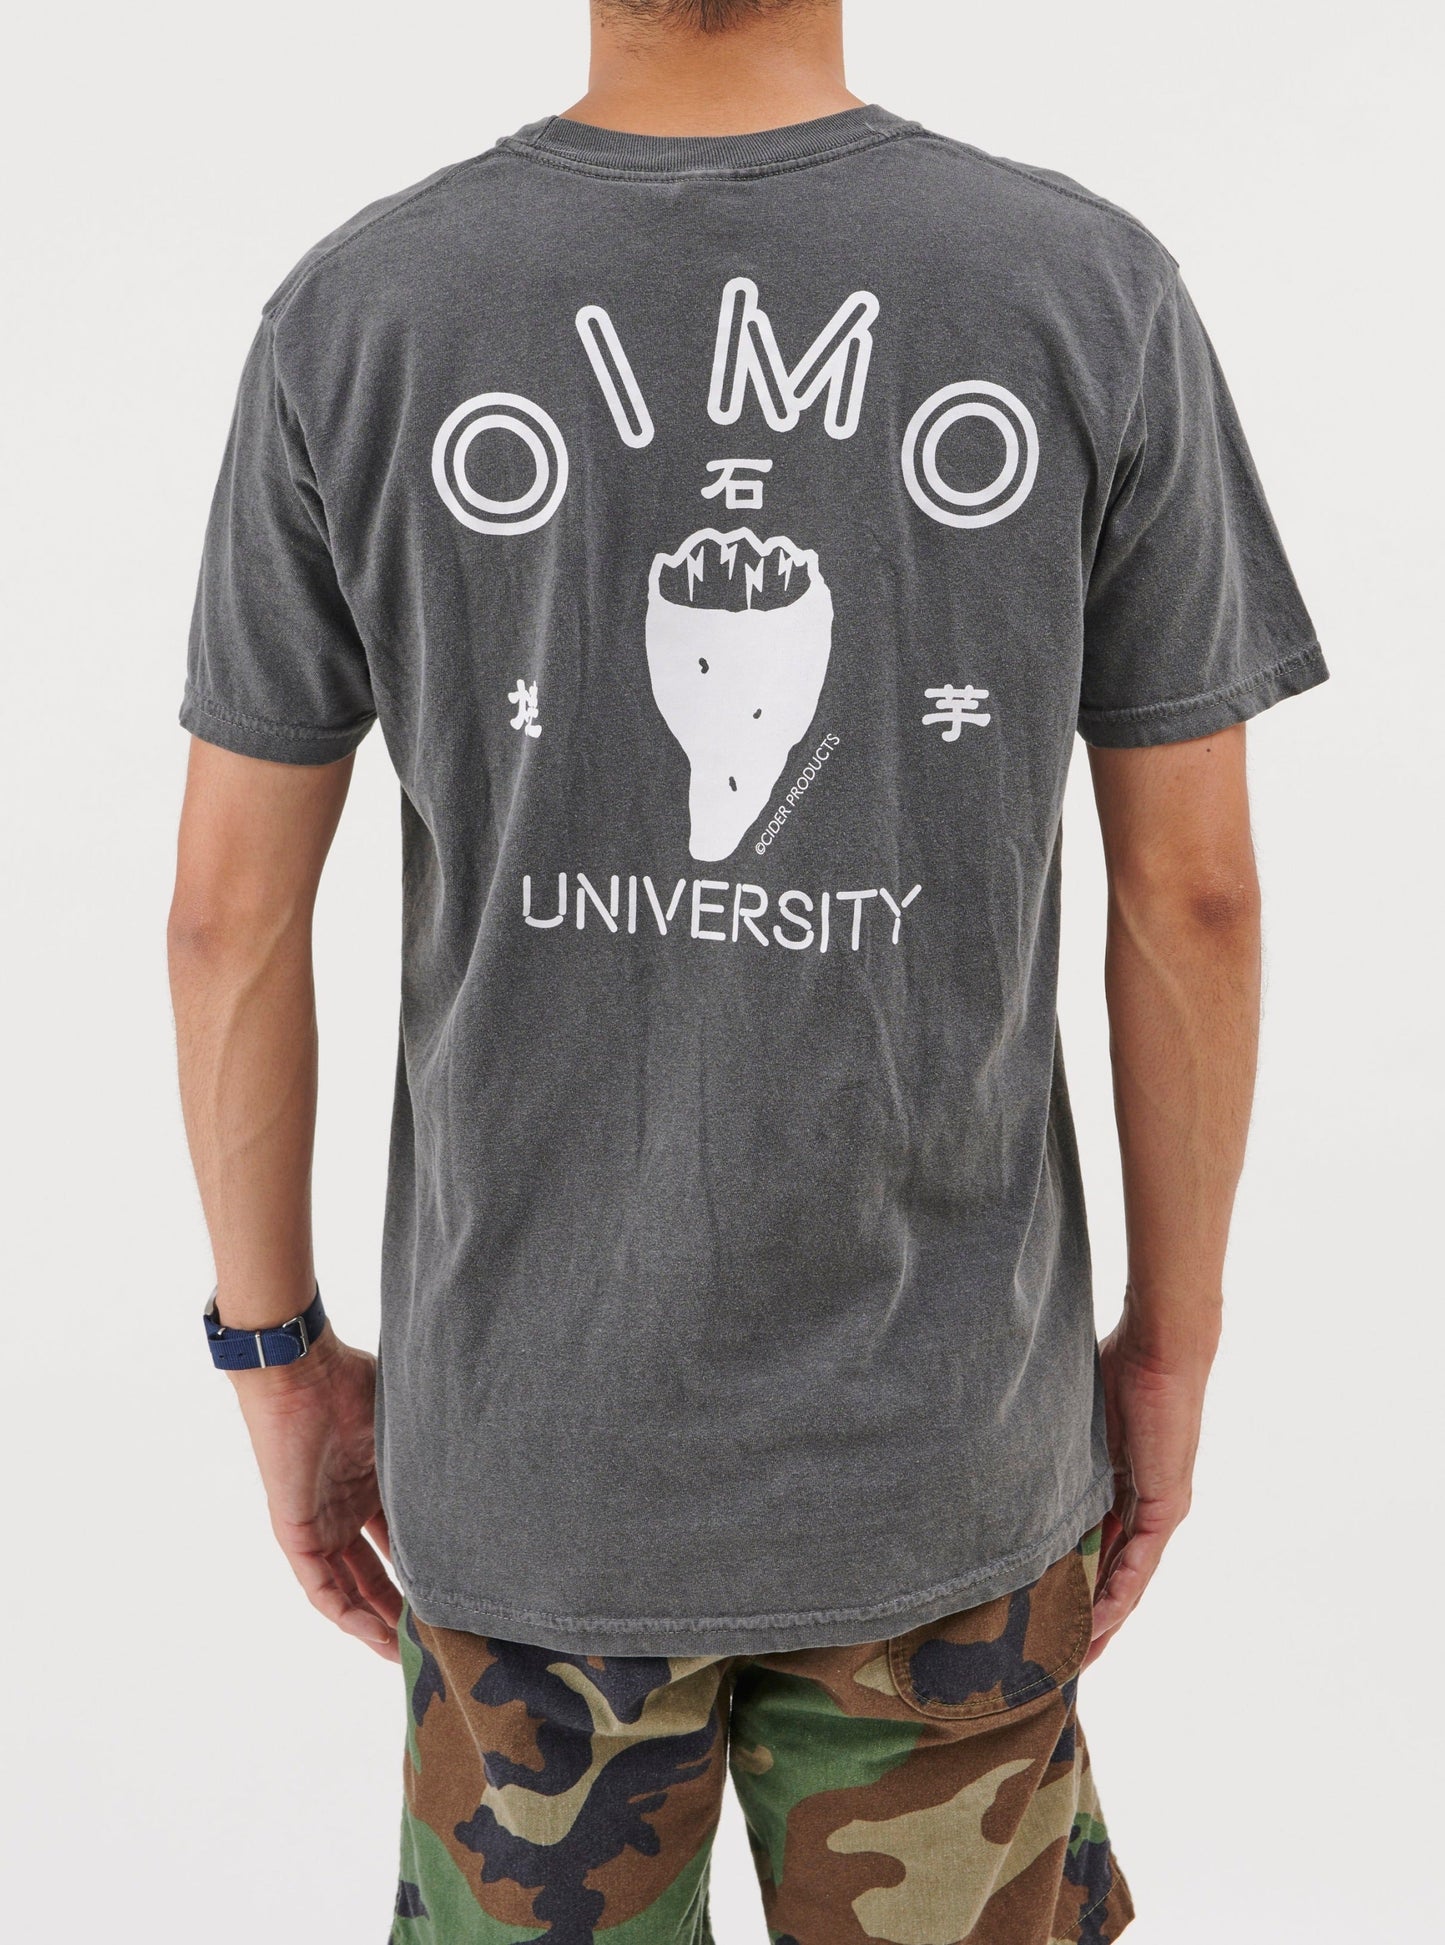 OIMO UNIV. Tshirt / グレー